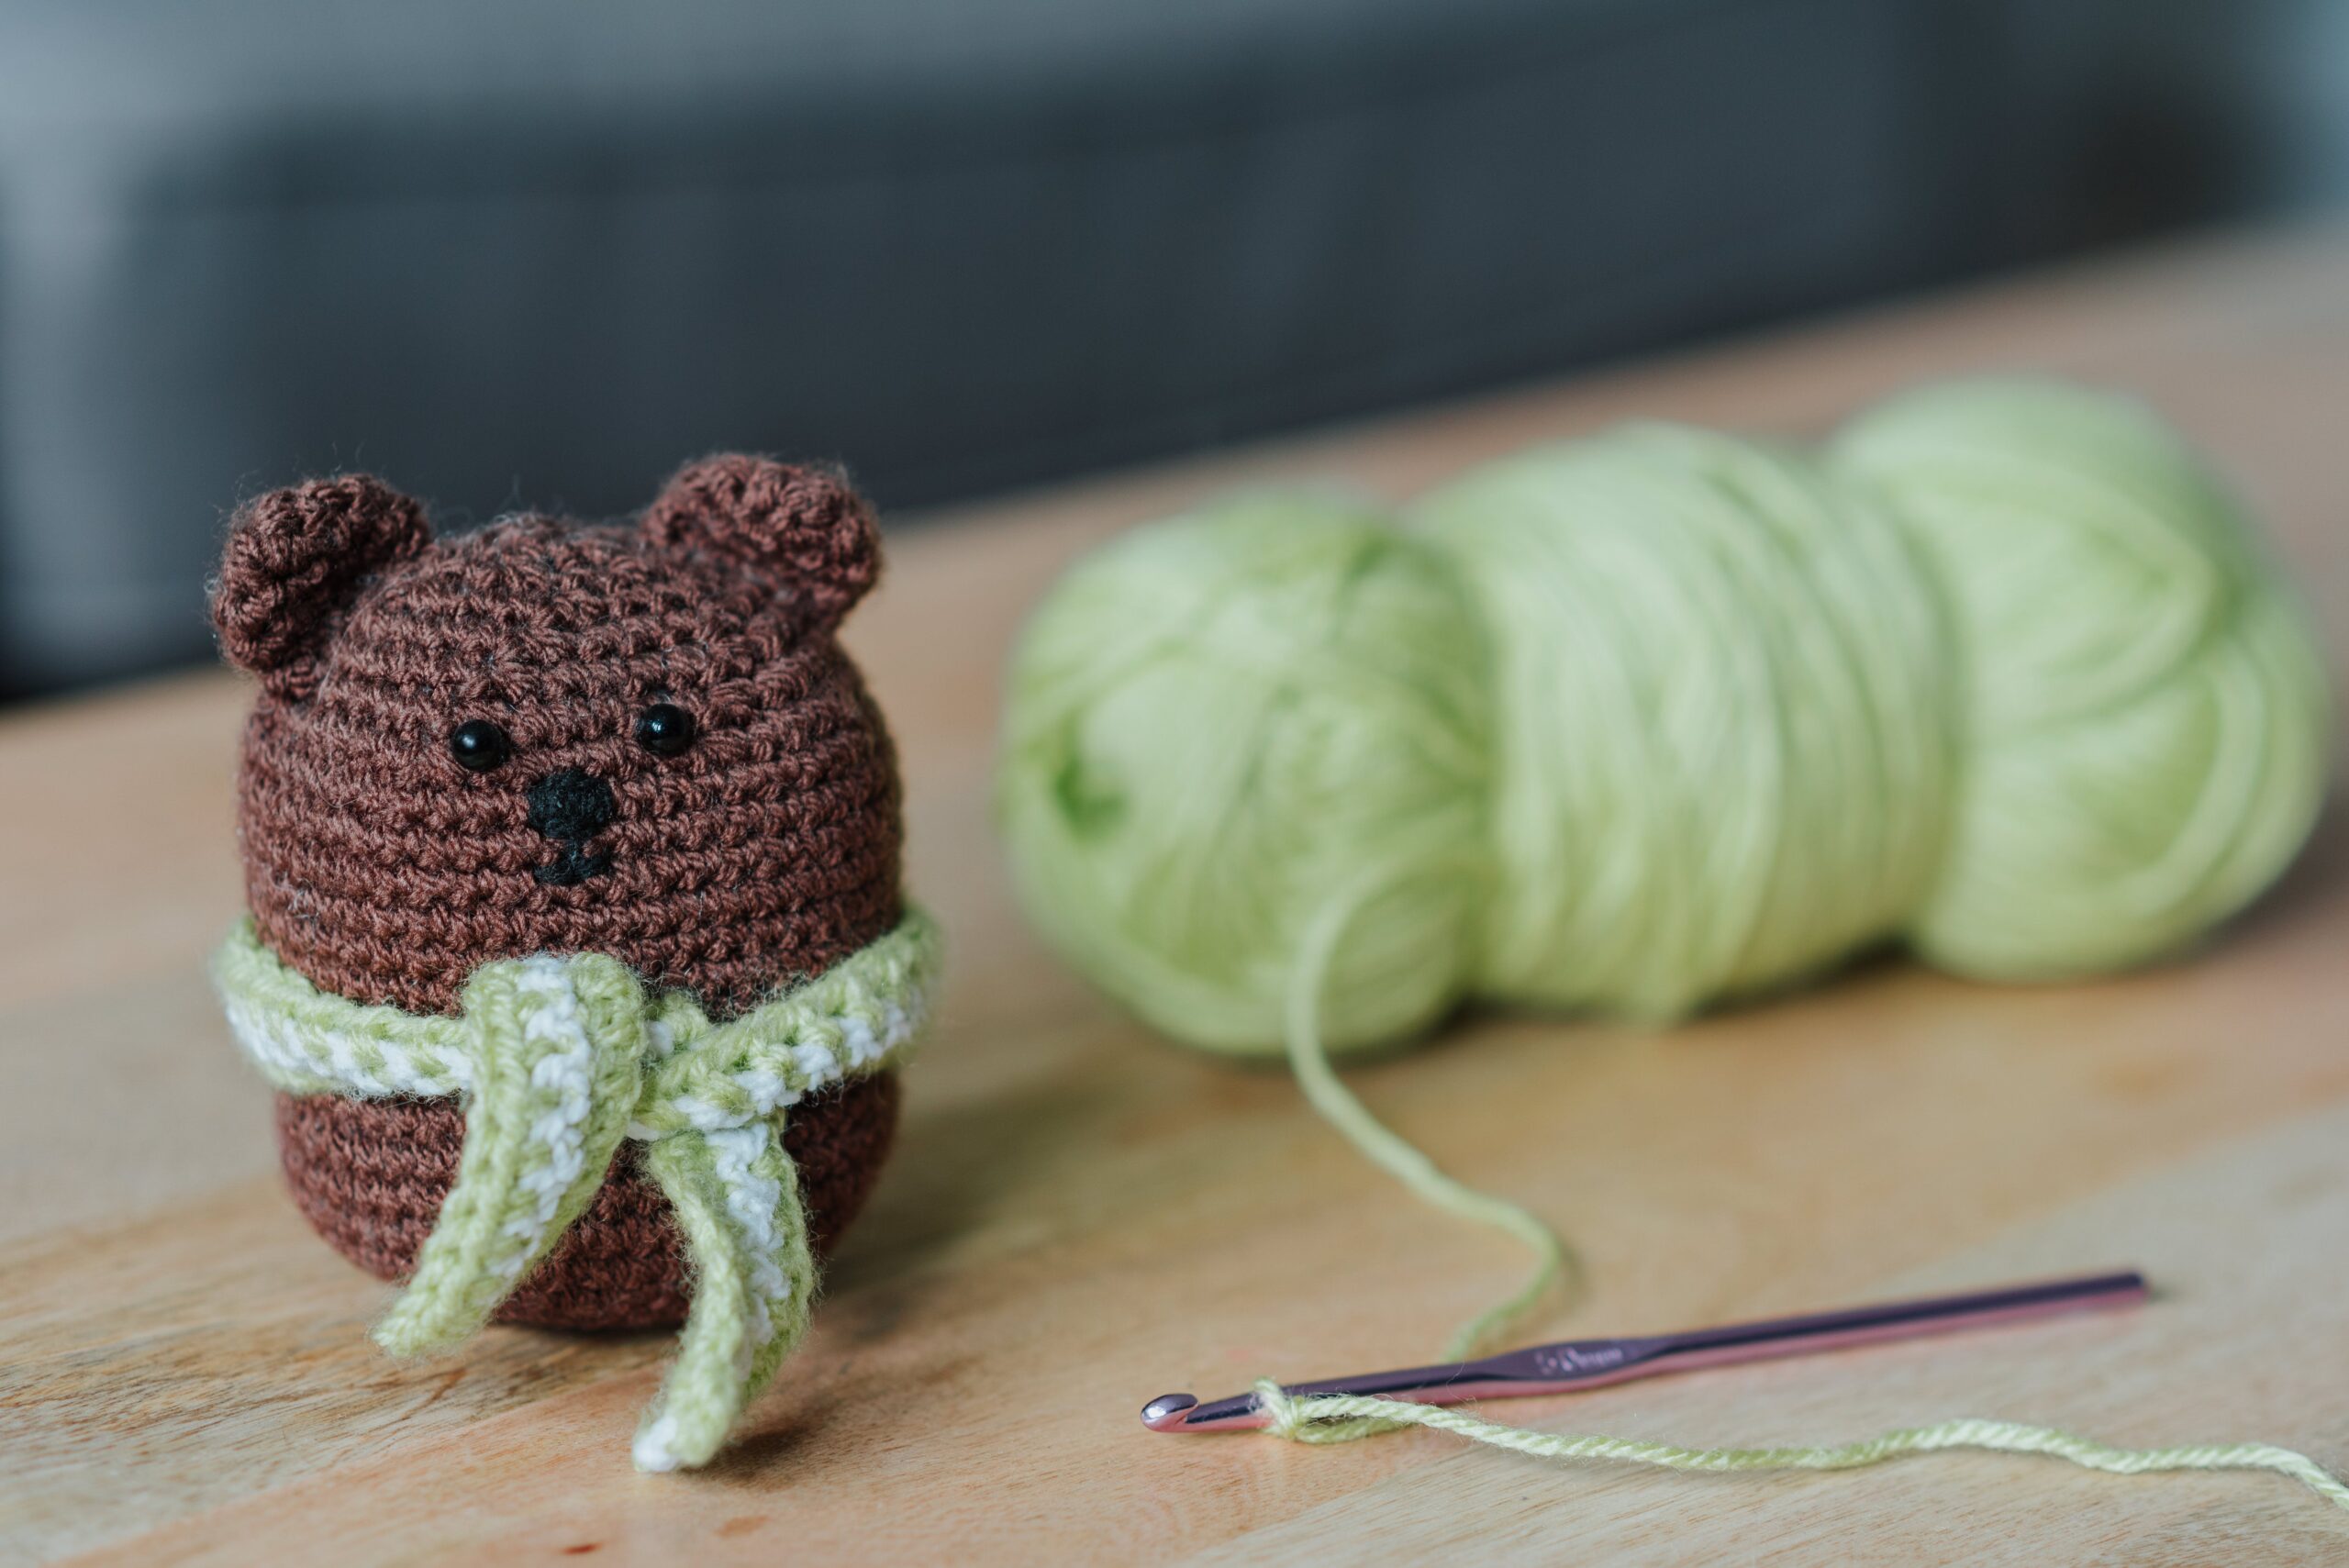 Find Your Perfect Crochet Hook Set: Editors' Picks